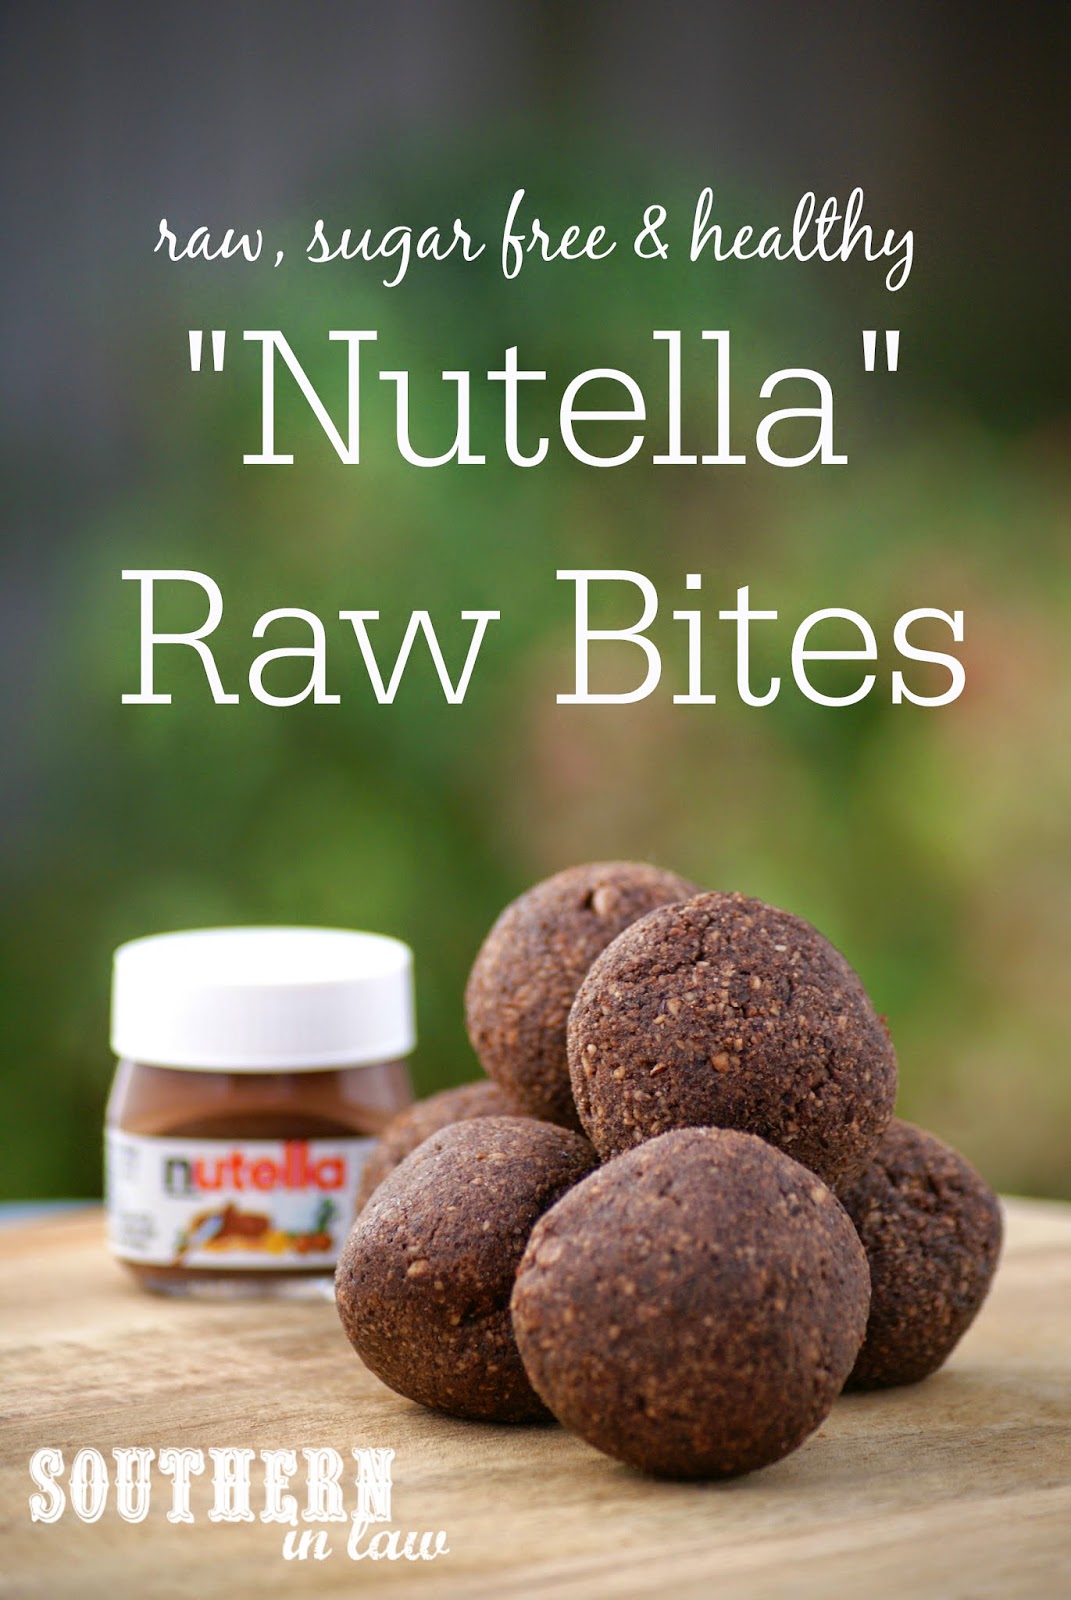 Nutella Raw Bites - Gluten Free, Sugar Free, Freezer Friendly, Clean Eating Friendly, Raw, Vegan